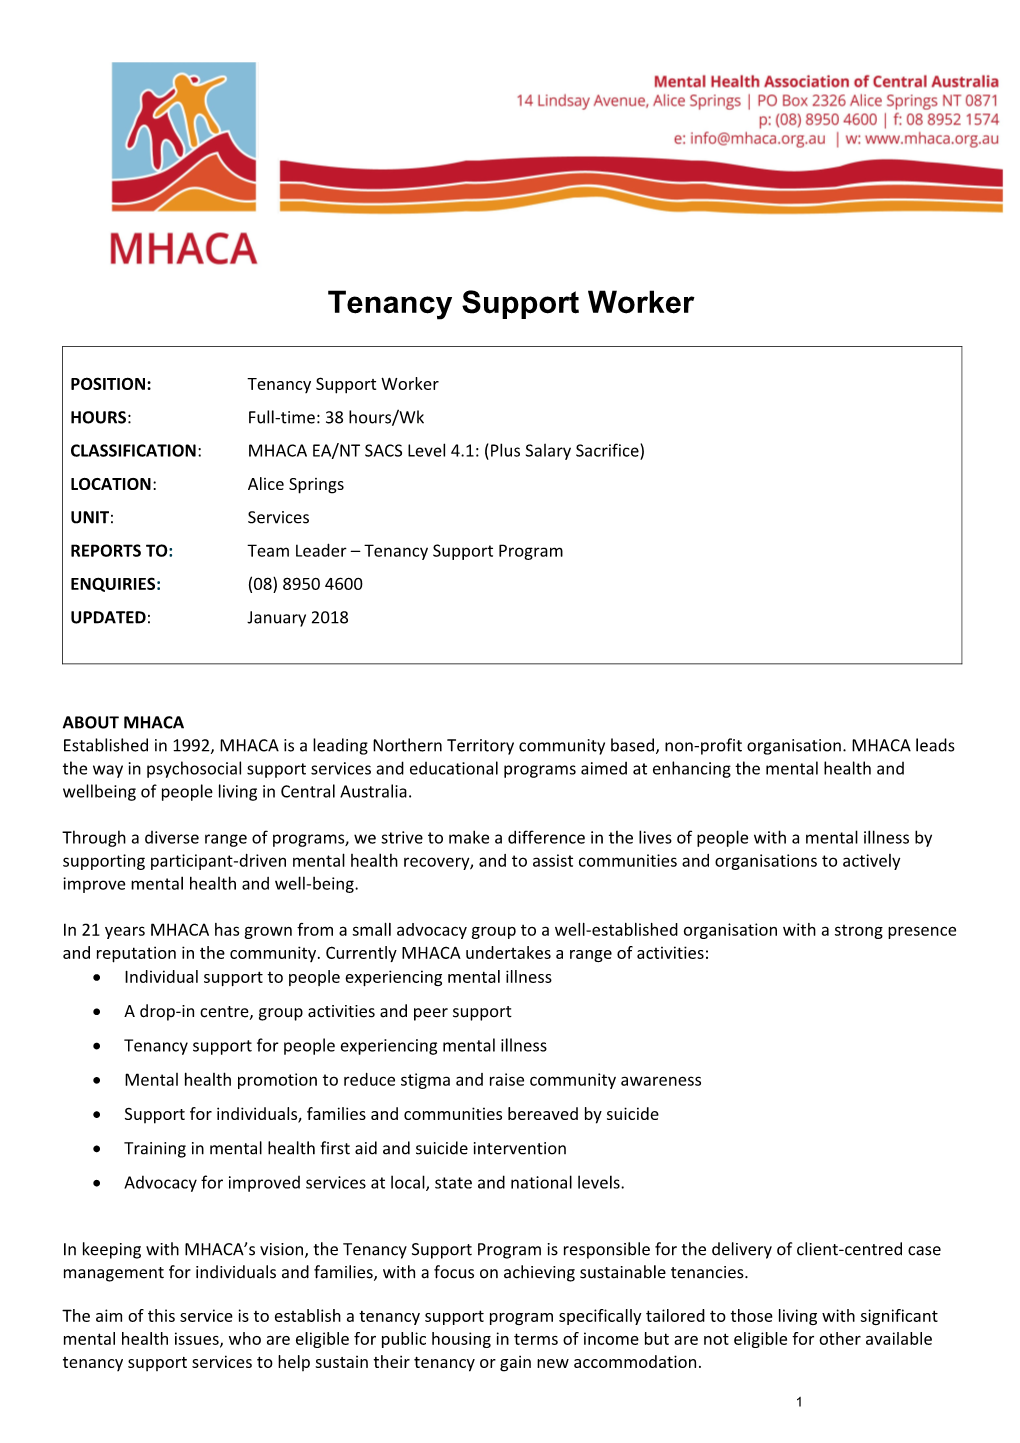 POSITION:Tenancy Support Worker